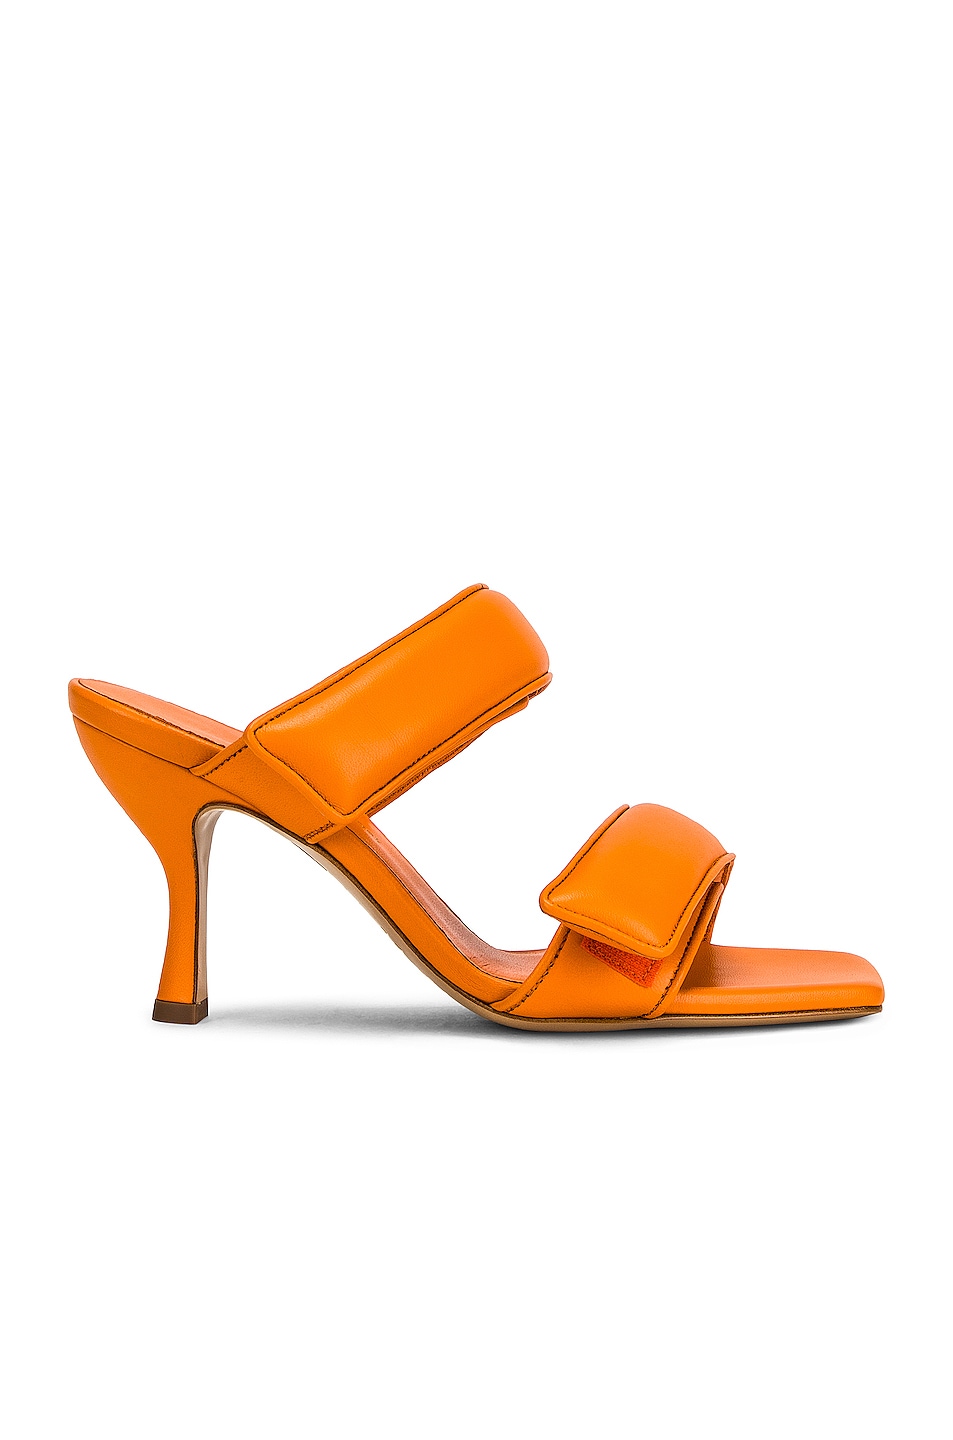 Image 1 of GIA BORGHINI x Pernille Teisbaek Two Strap Sandal in Flash Orange